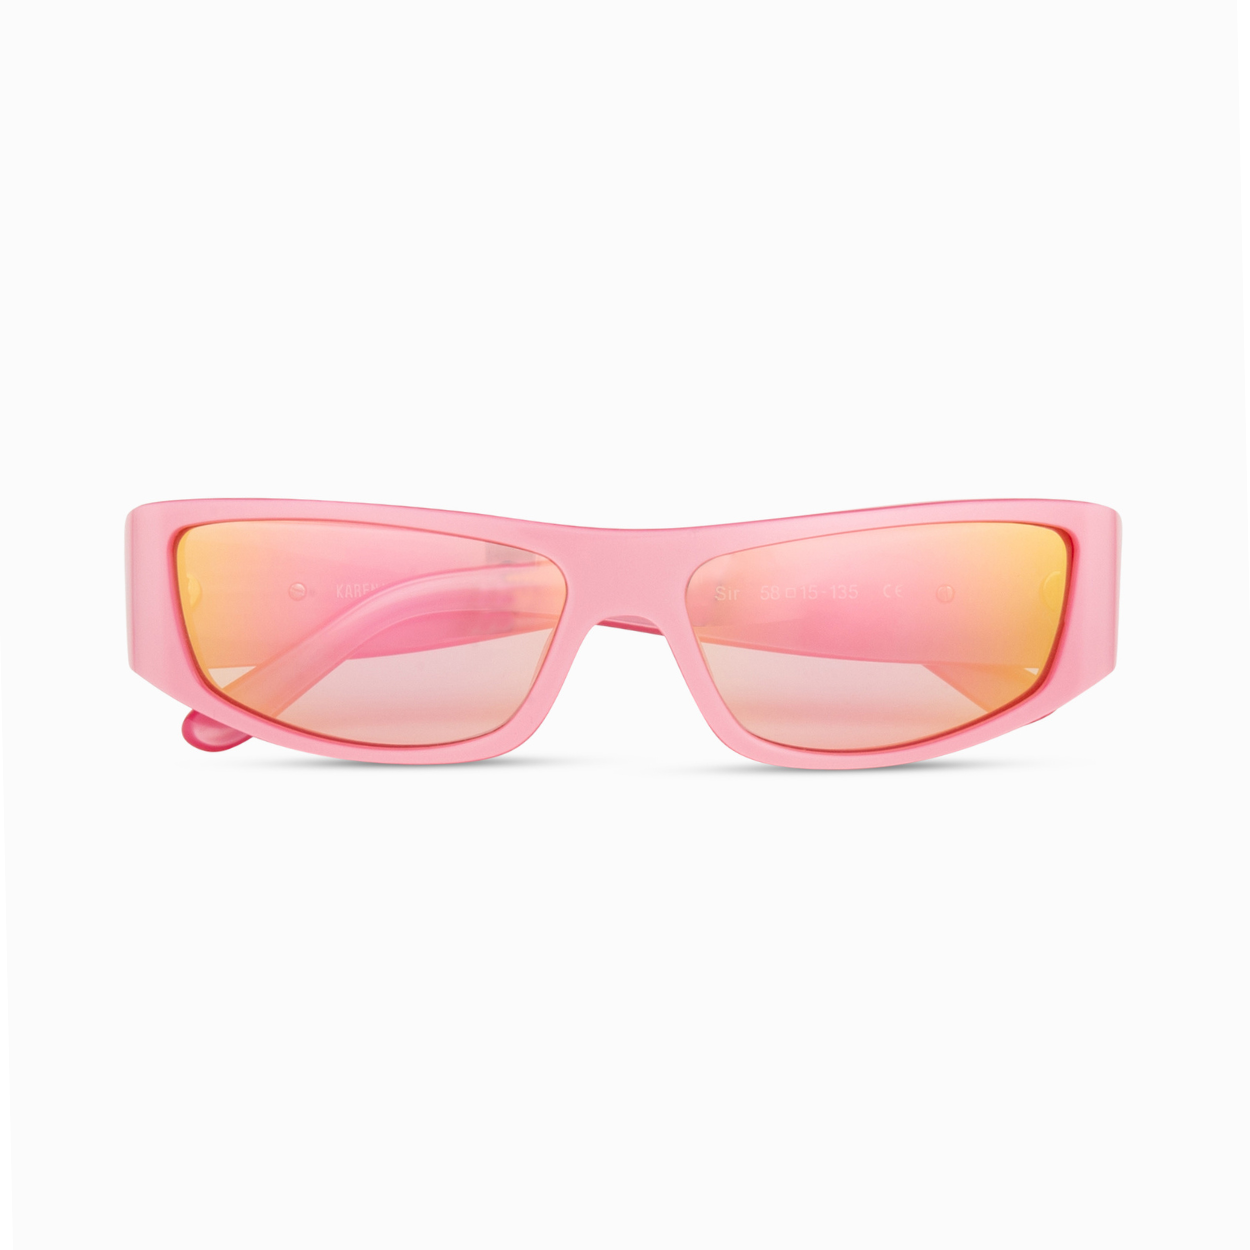 Front view | Rectangular sunglasses with Mirror Pink lenses and Pink frames | Acetate | Sir| Women's sunglasses | Karen Wazen Eyewear